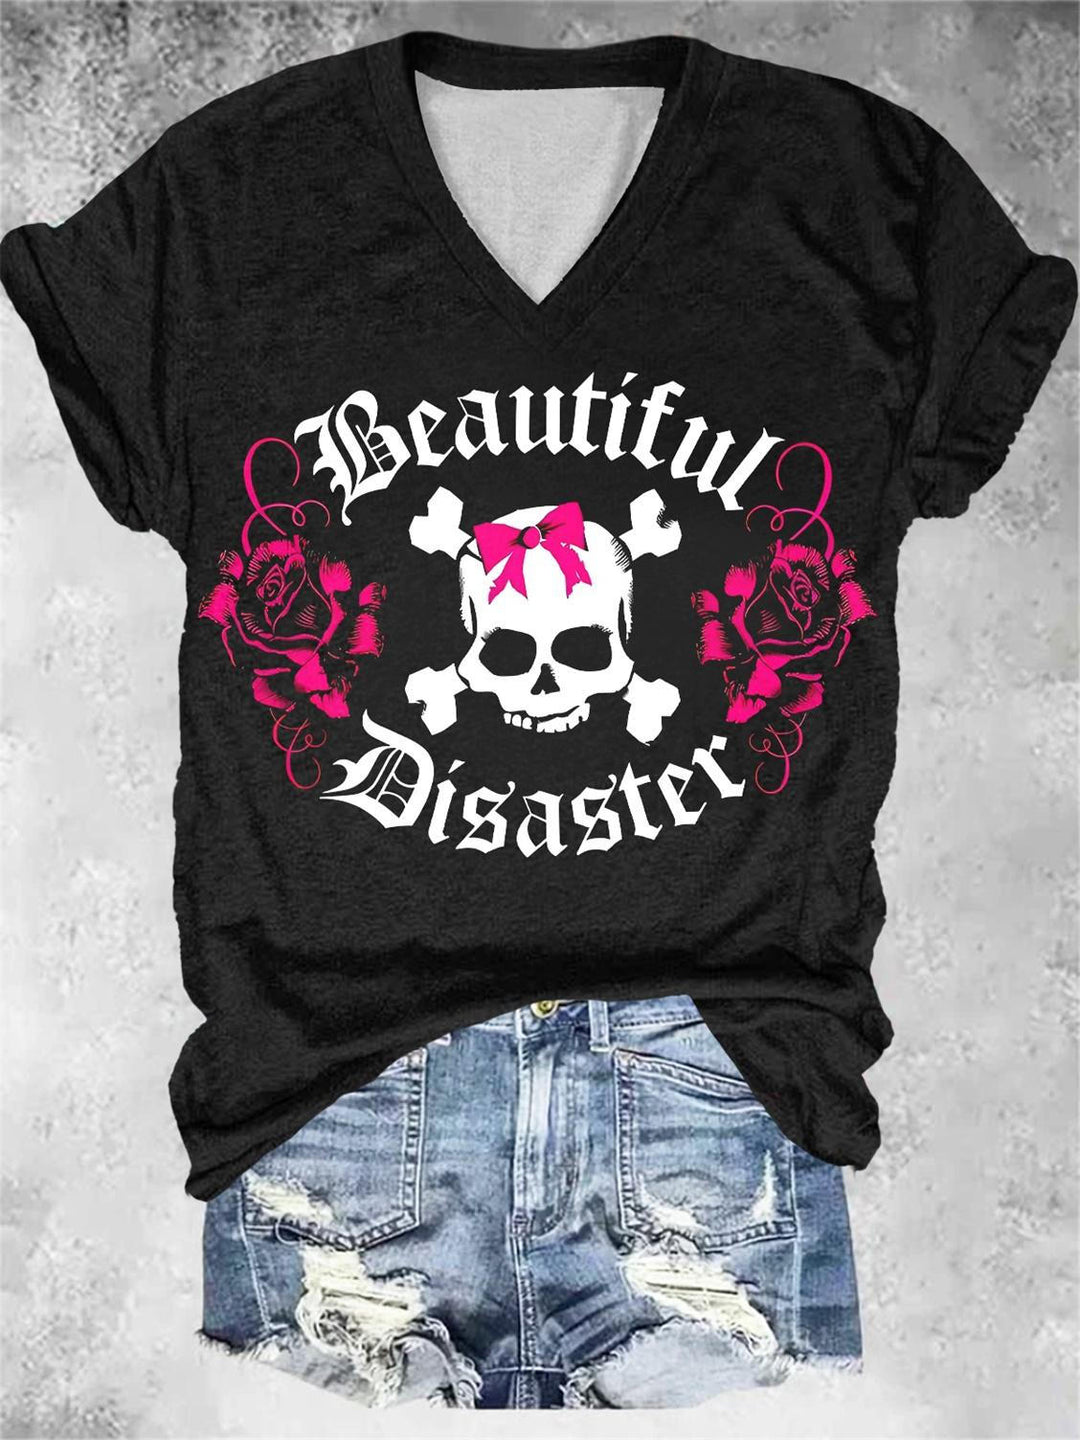 Beautiful Disaster Skull Print V-Neck T-Shirt